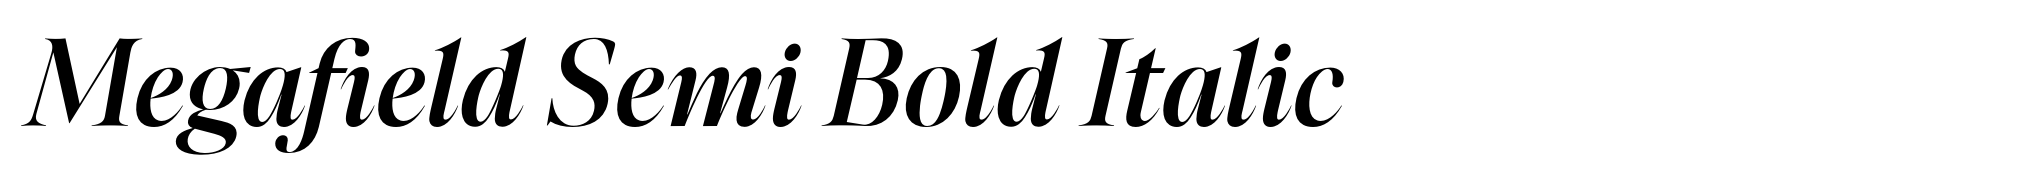 Megafield Semi Bold Italic image